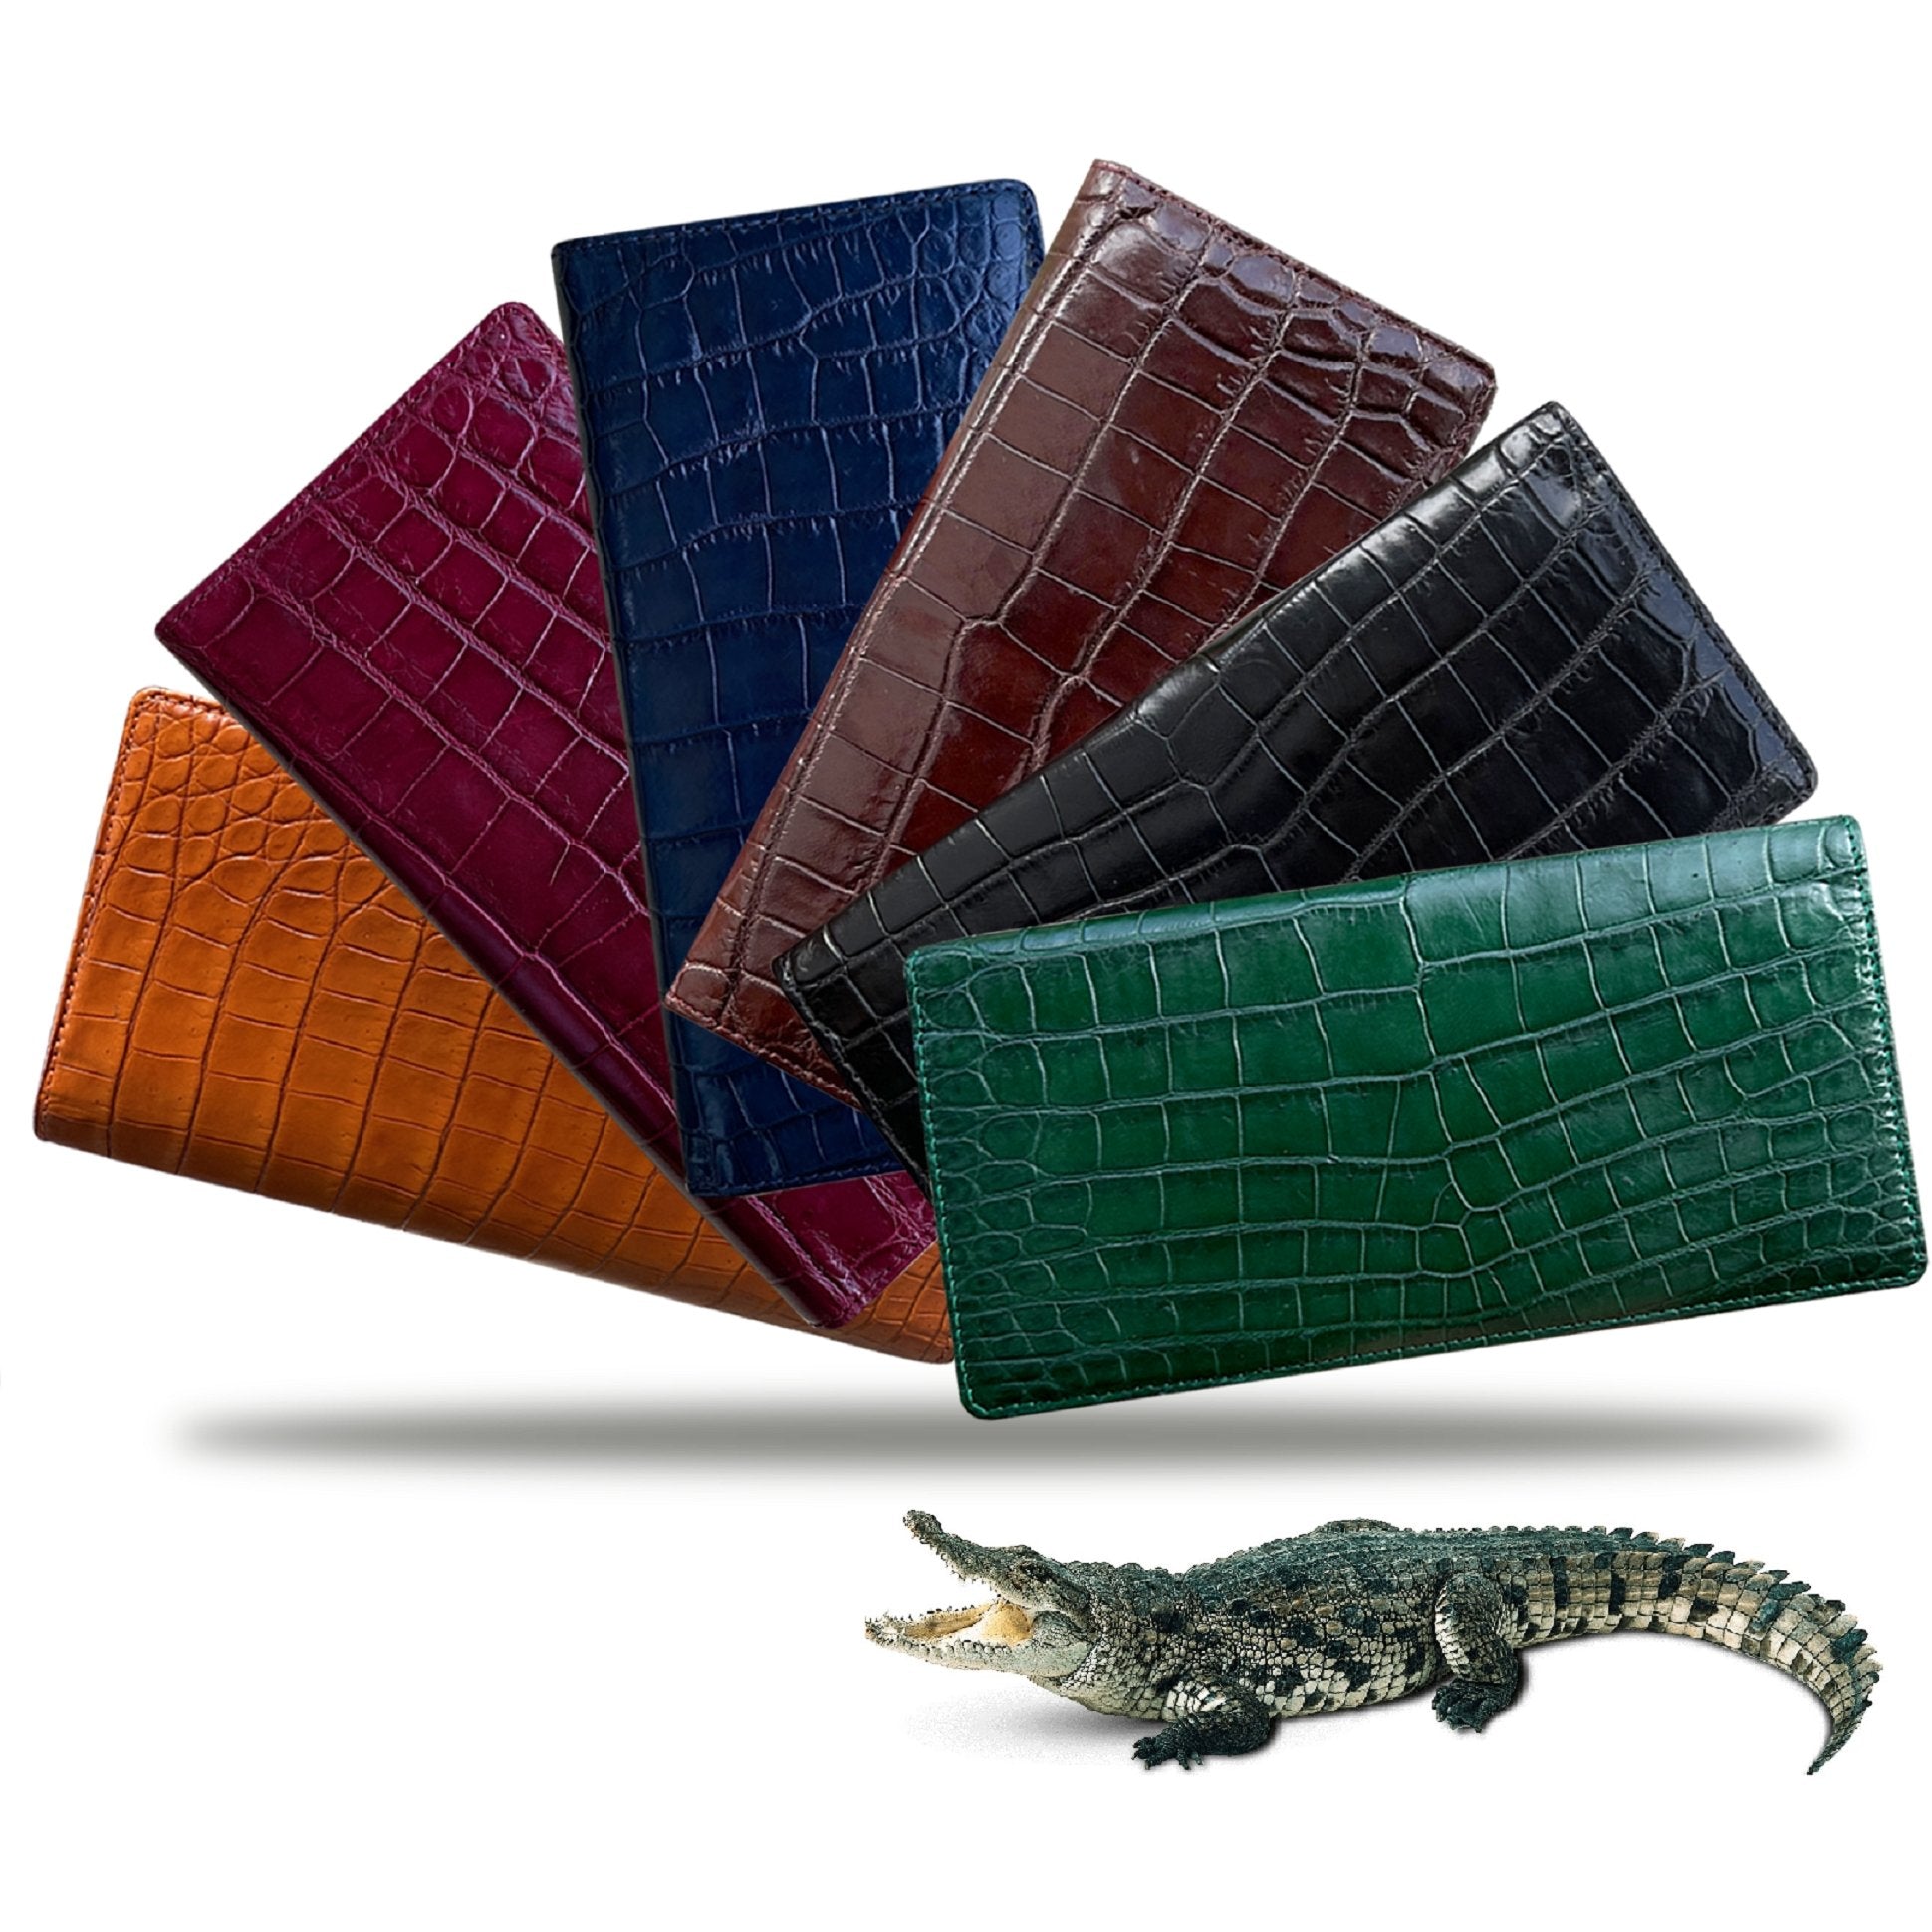 Dark Brown Alligator Long Wallet For Men | Handmade Crocodile Leather Secretary Business Tall Bifold Wallet RFID Blocking | LON33 - Vinacreations